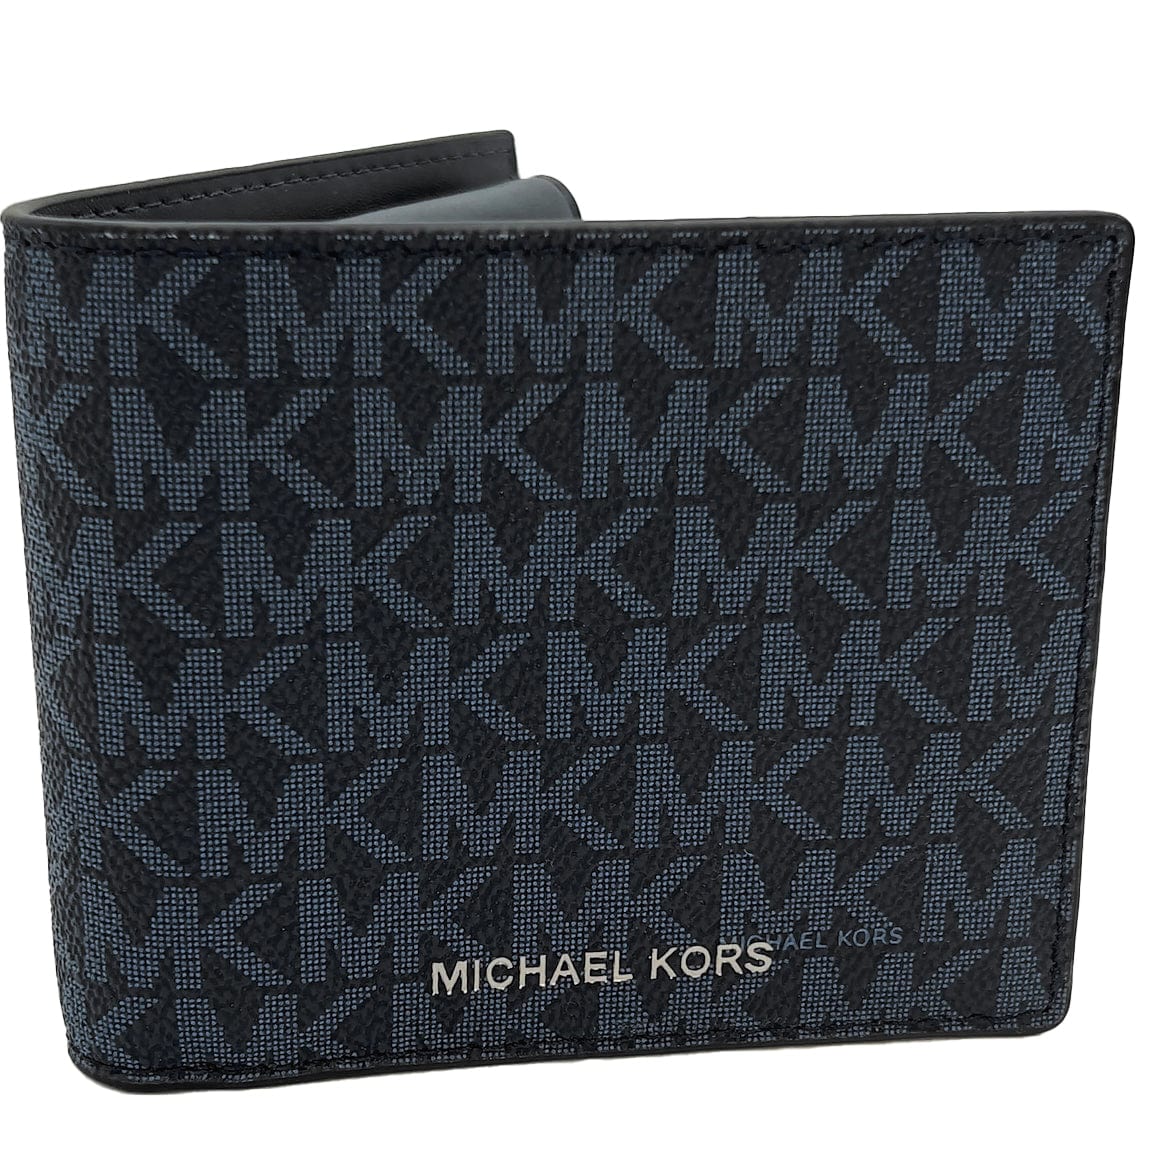 Michael kors wallet  Handbags michael kors, Michael kors wallet, Michael  kors